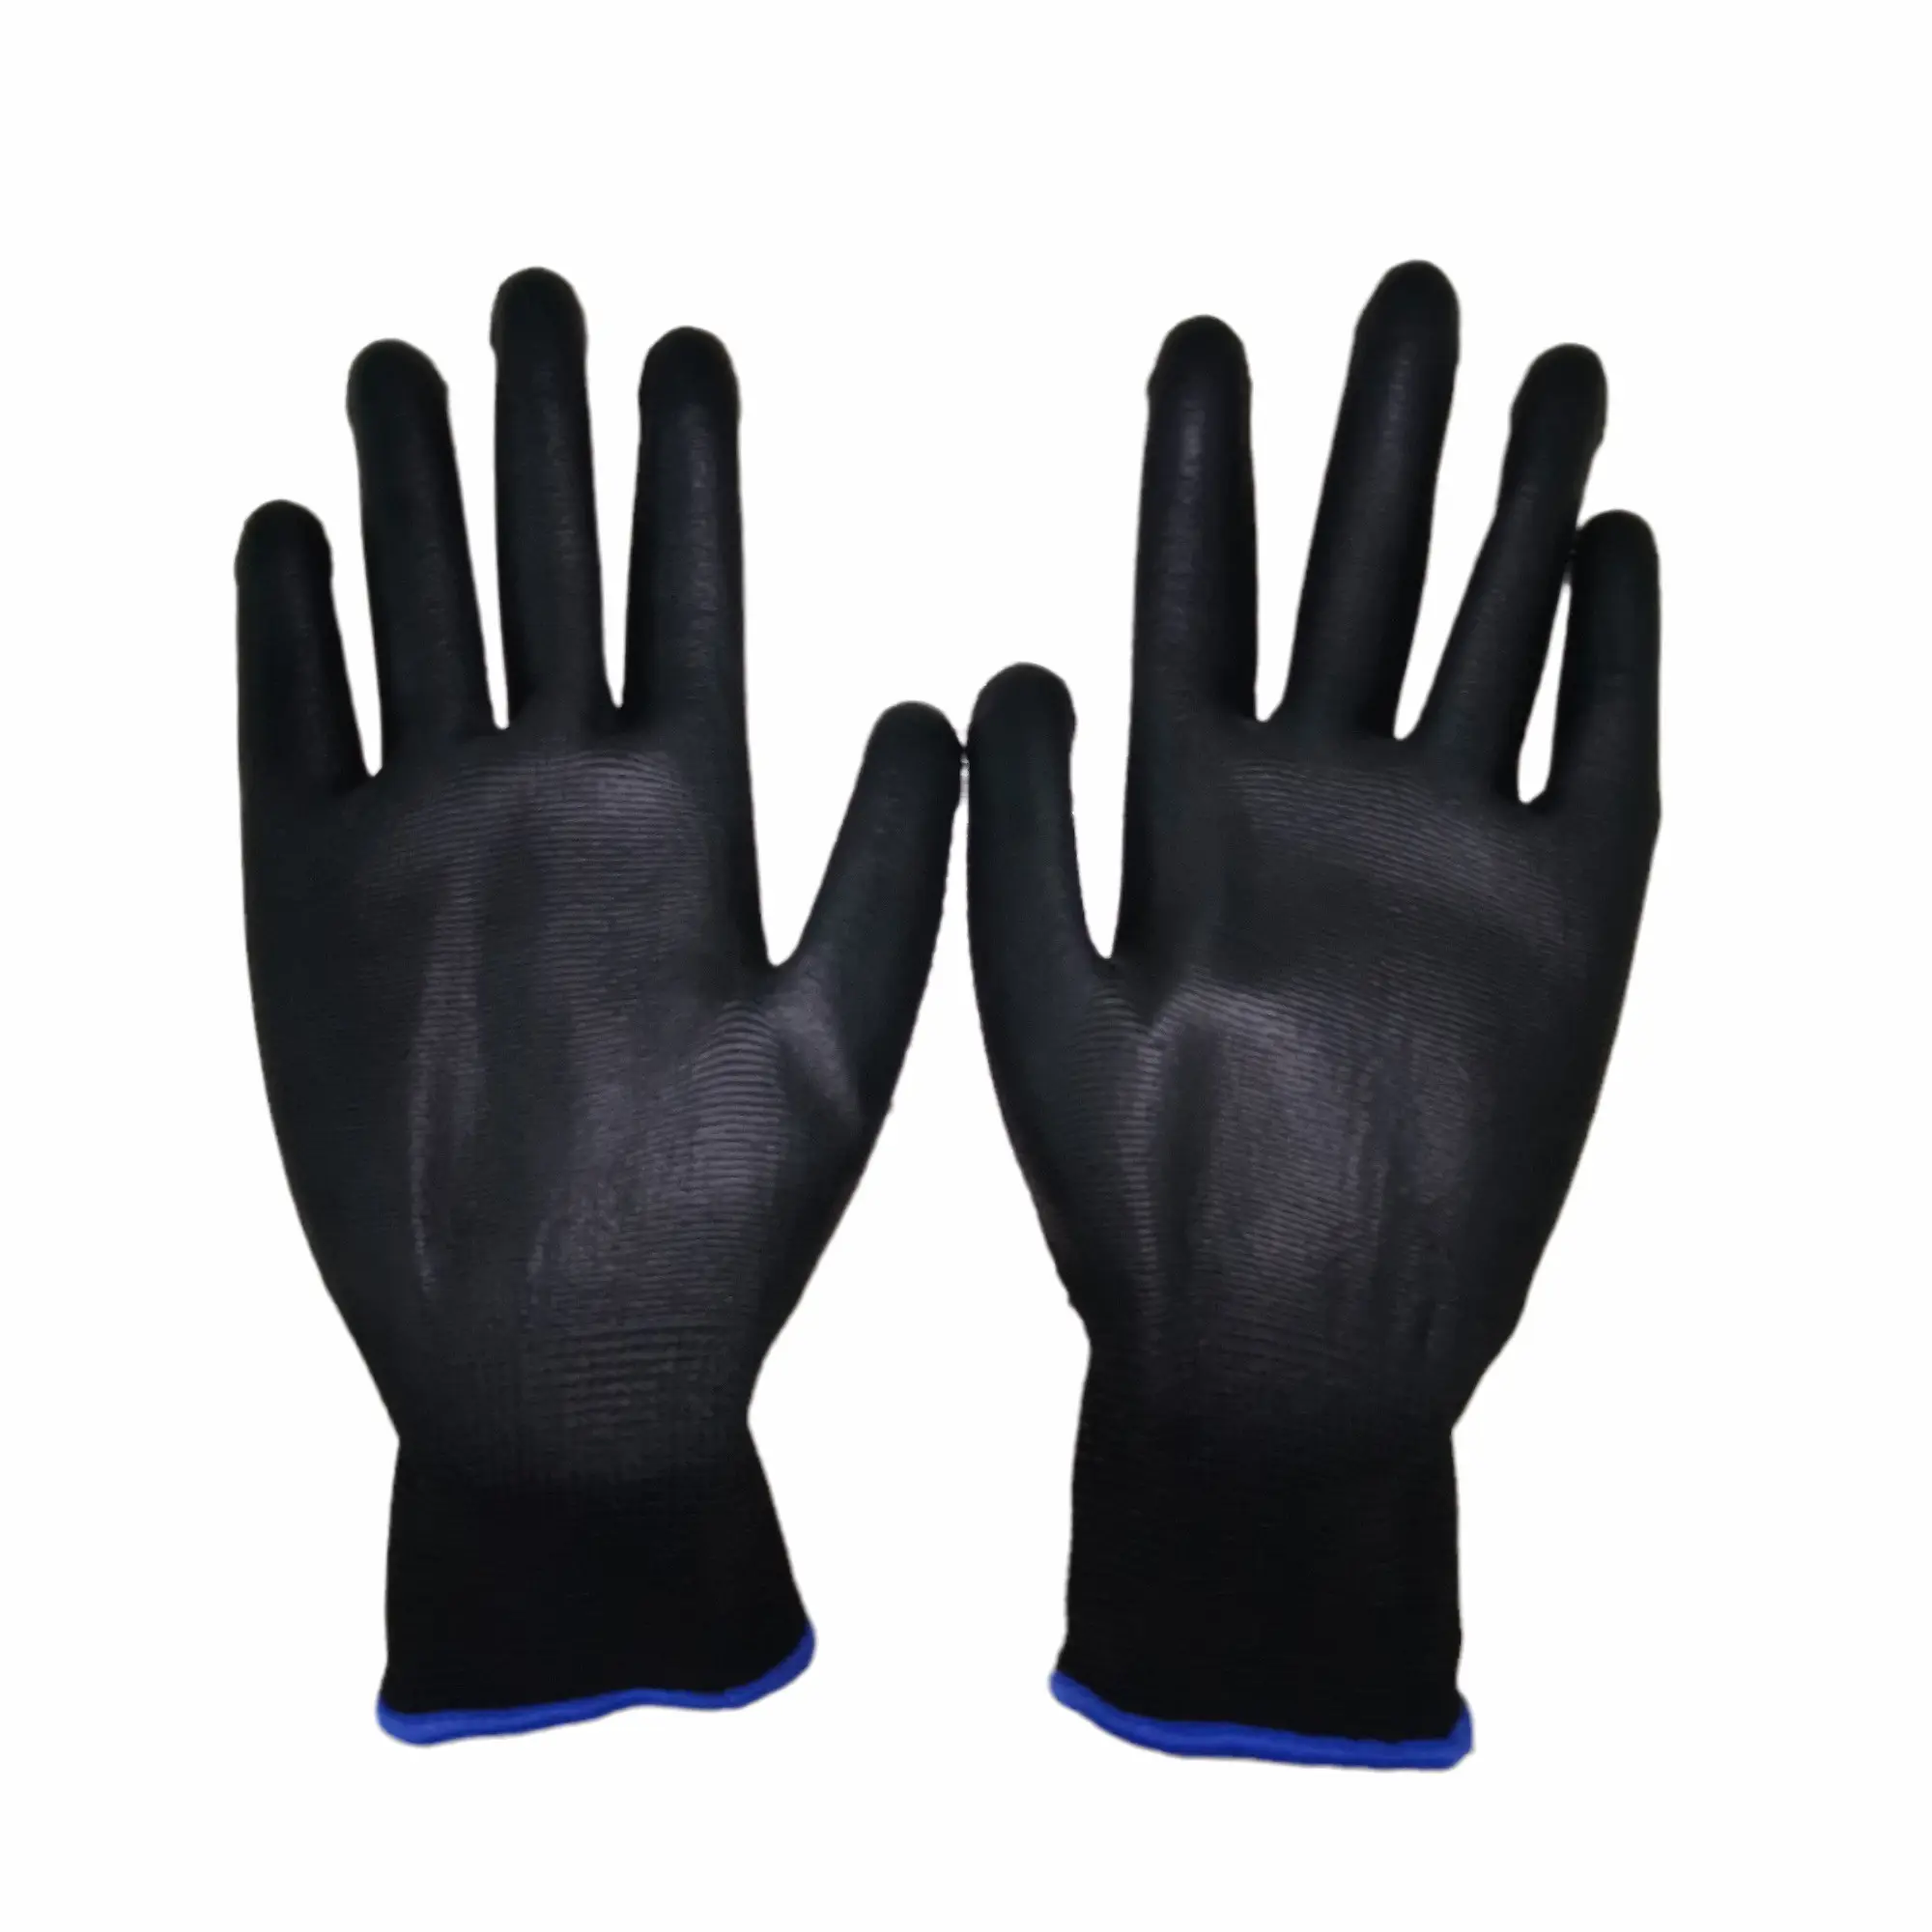 Black PU Work Gloves 13 Gauge Nylon Liner Sensitive Touch